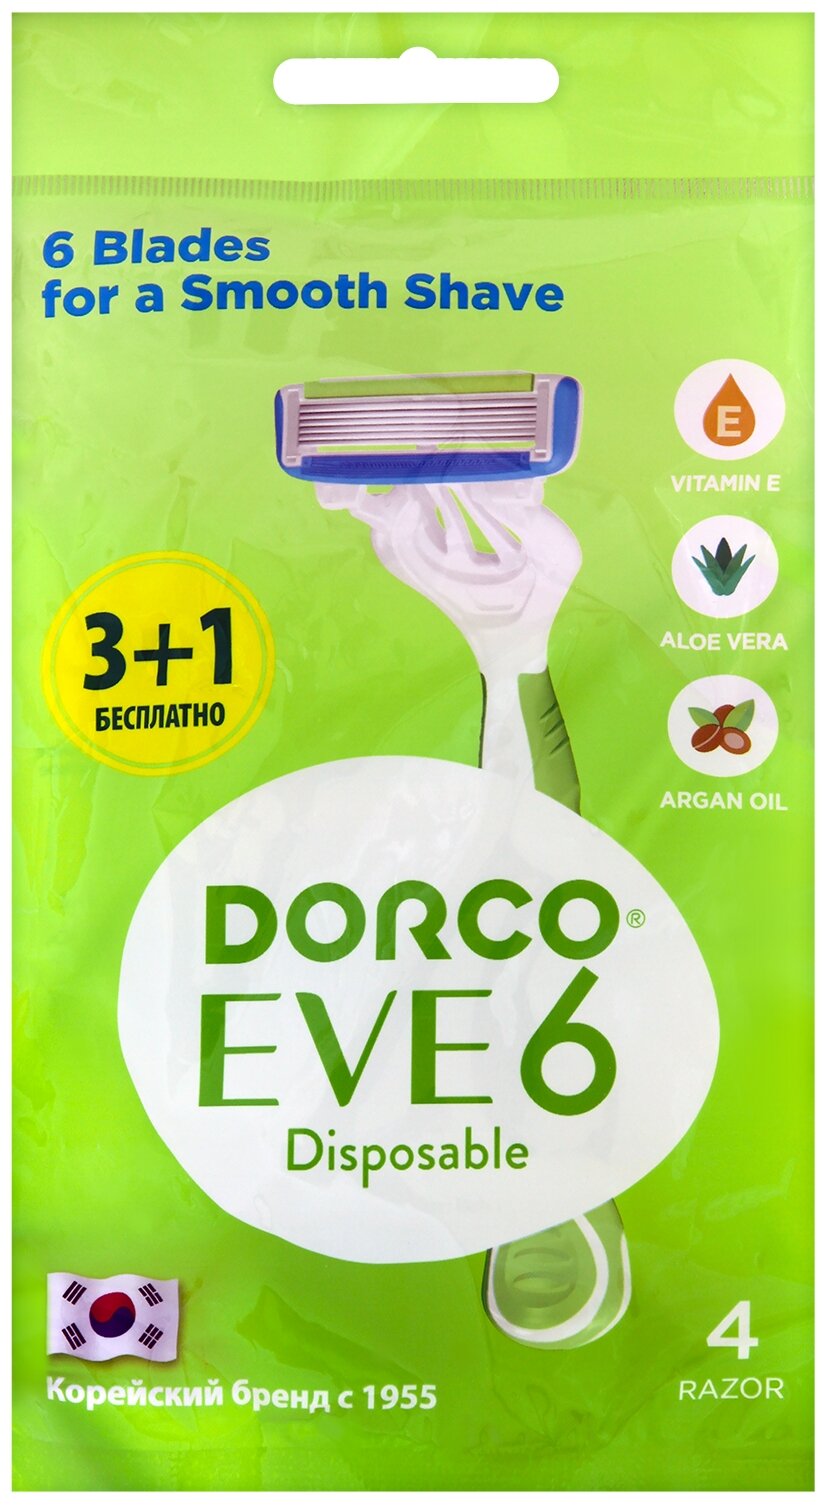 Dorco Eve 6 / Shai 6 бритвенный станок